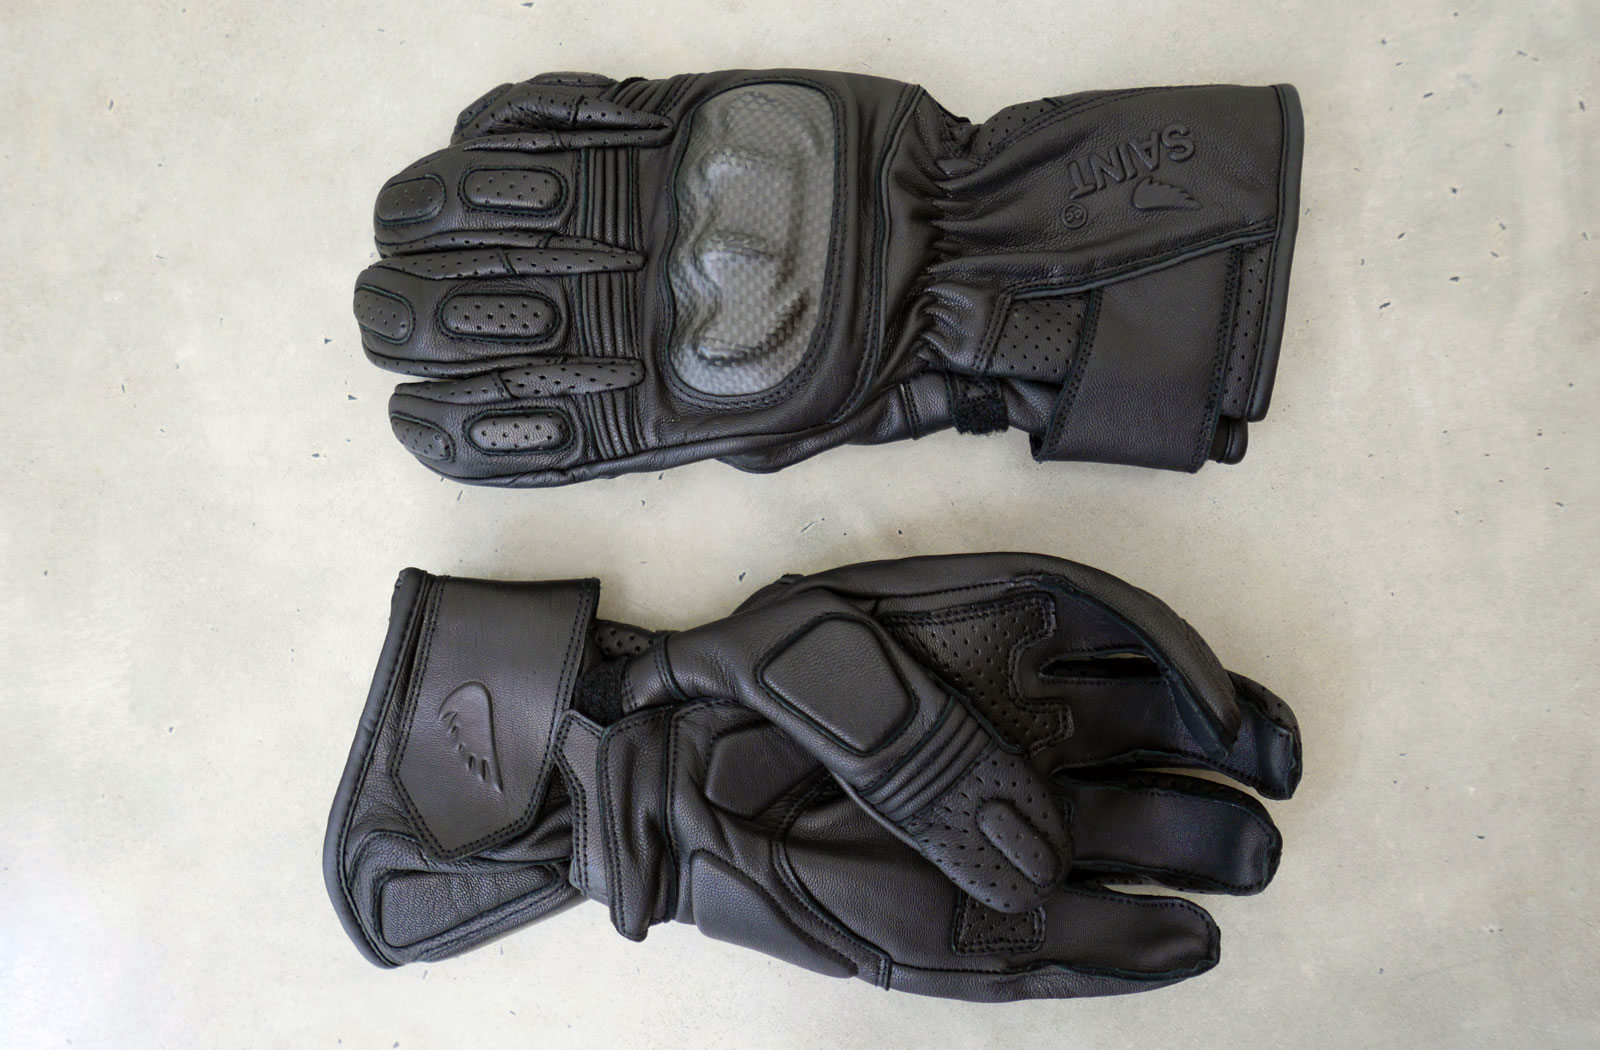 Saint Road Gloves Review